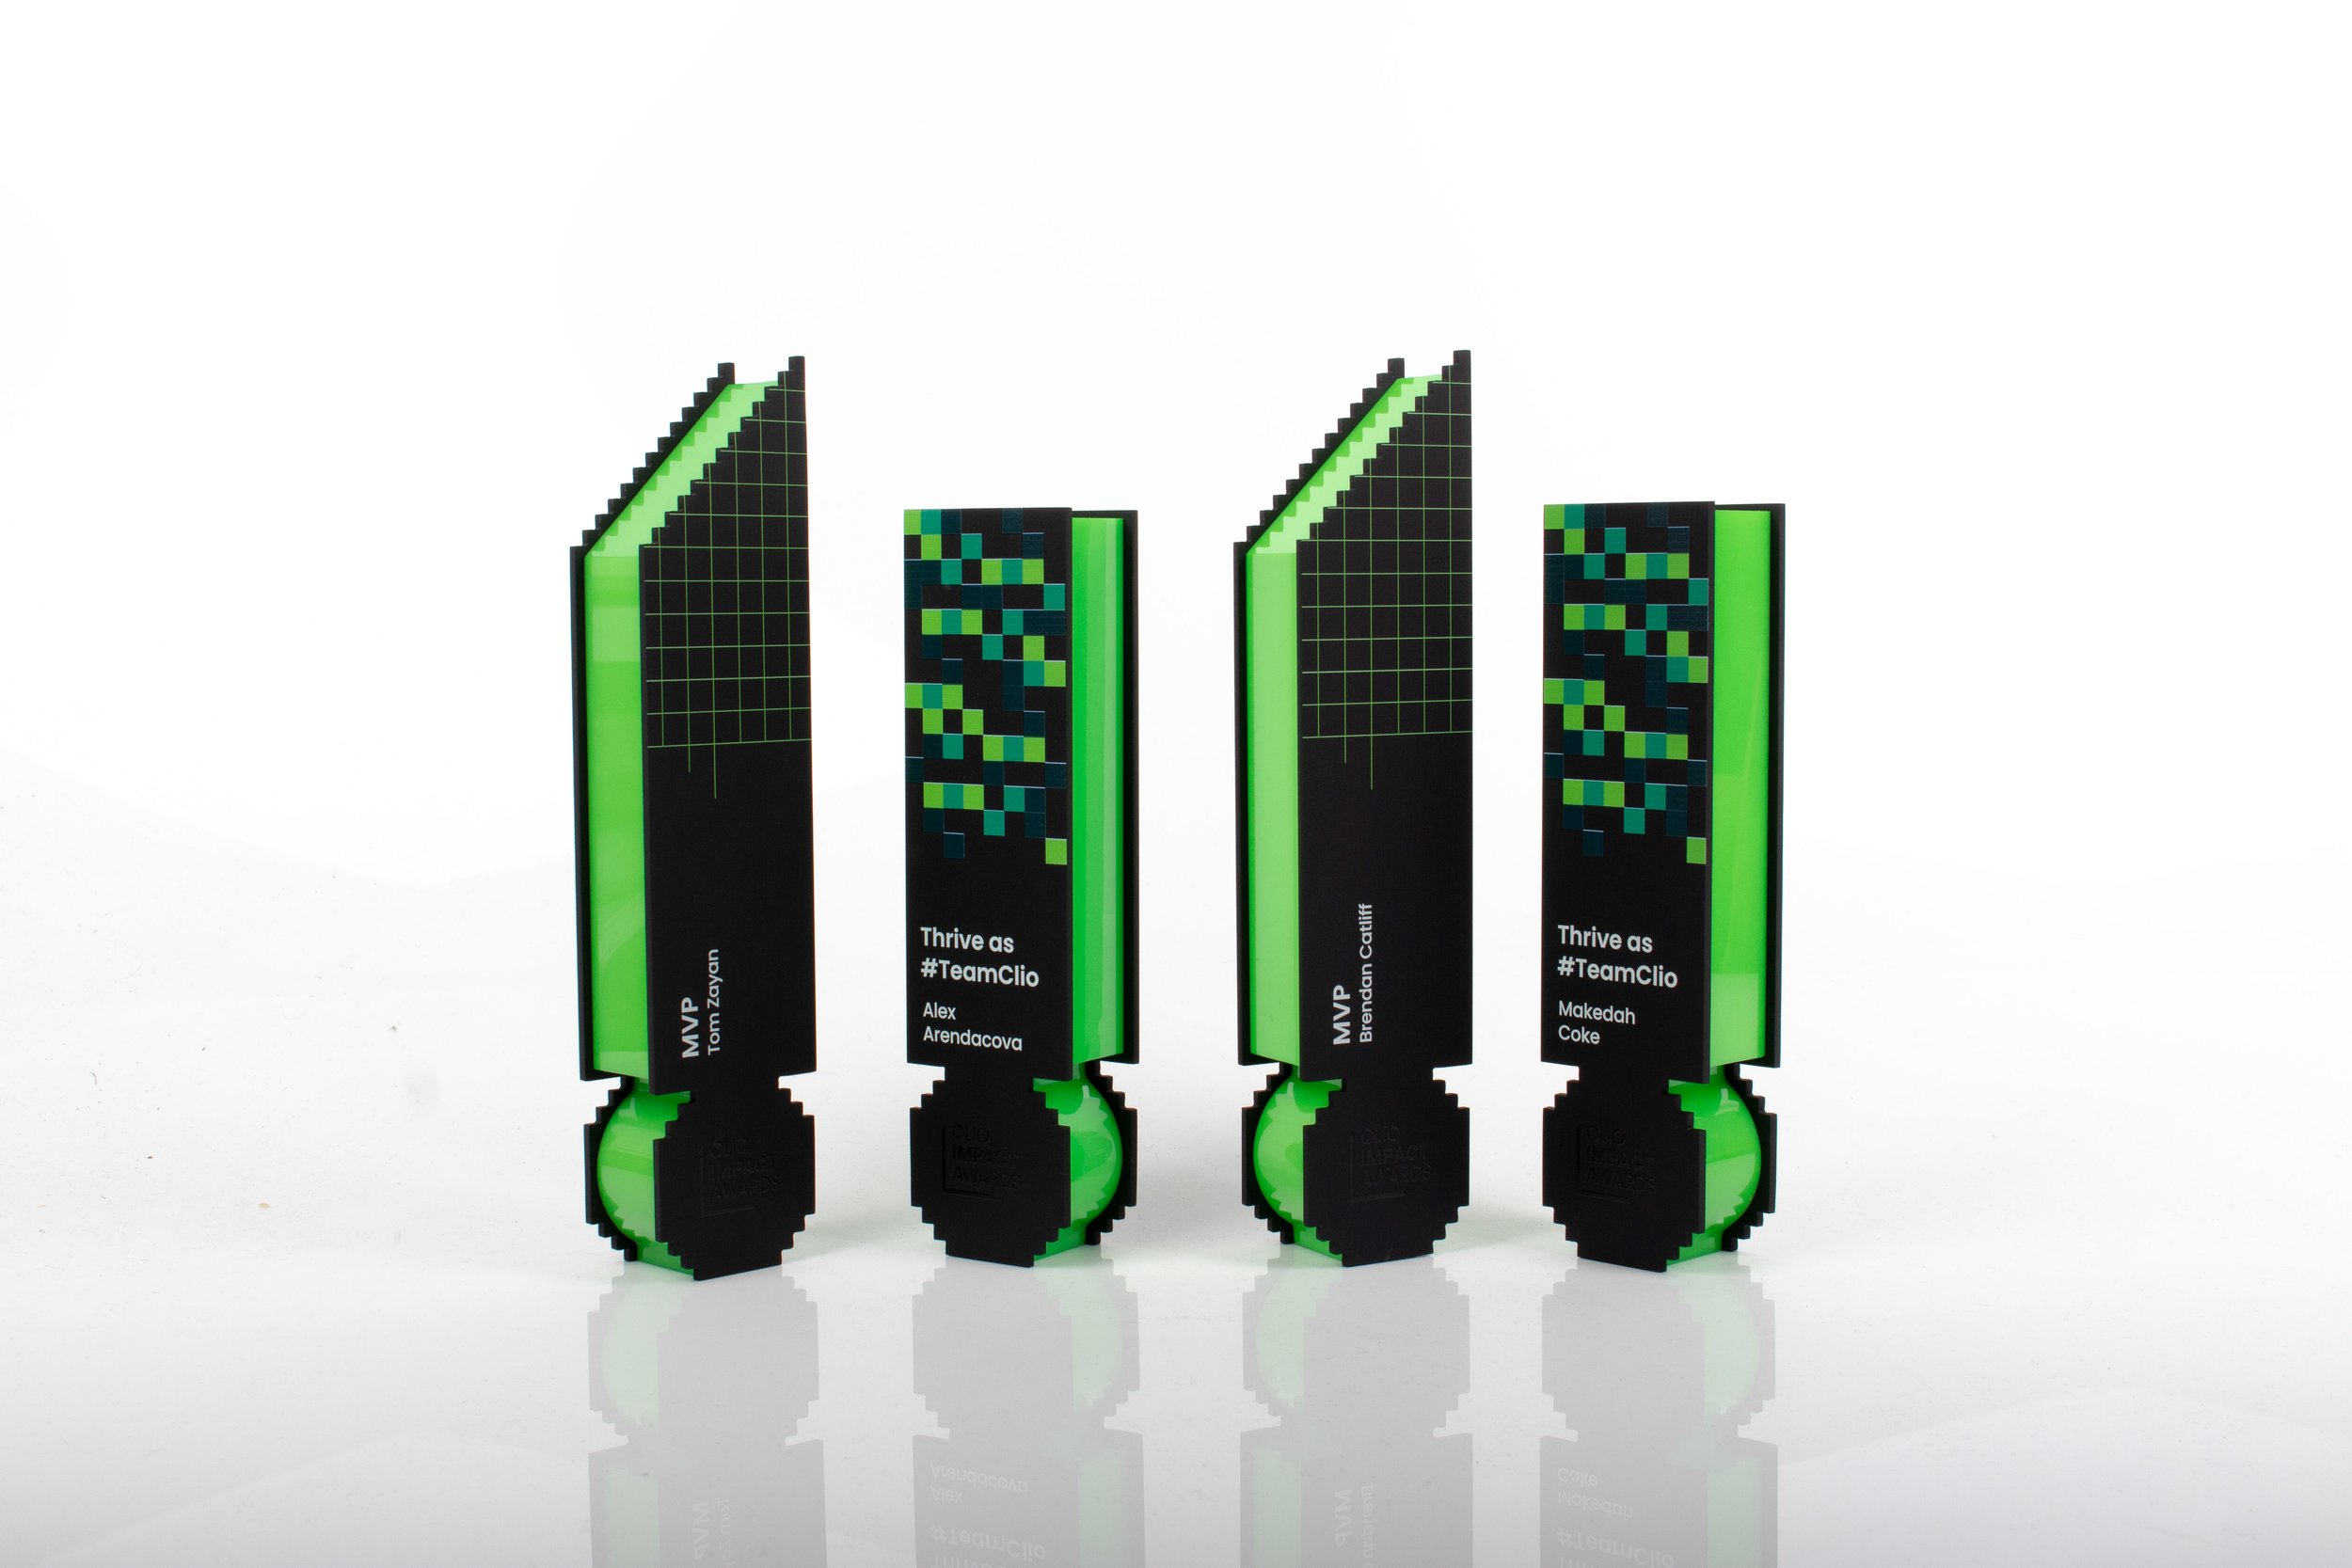 Clio acrylic and aluminum custom awards